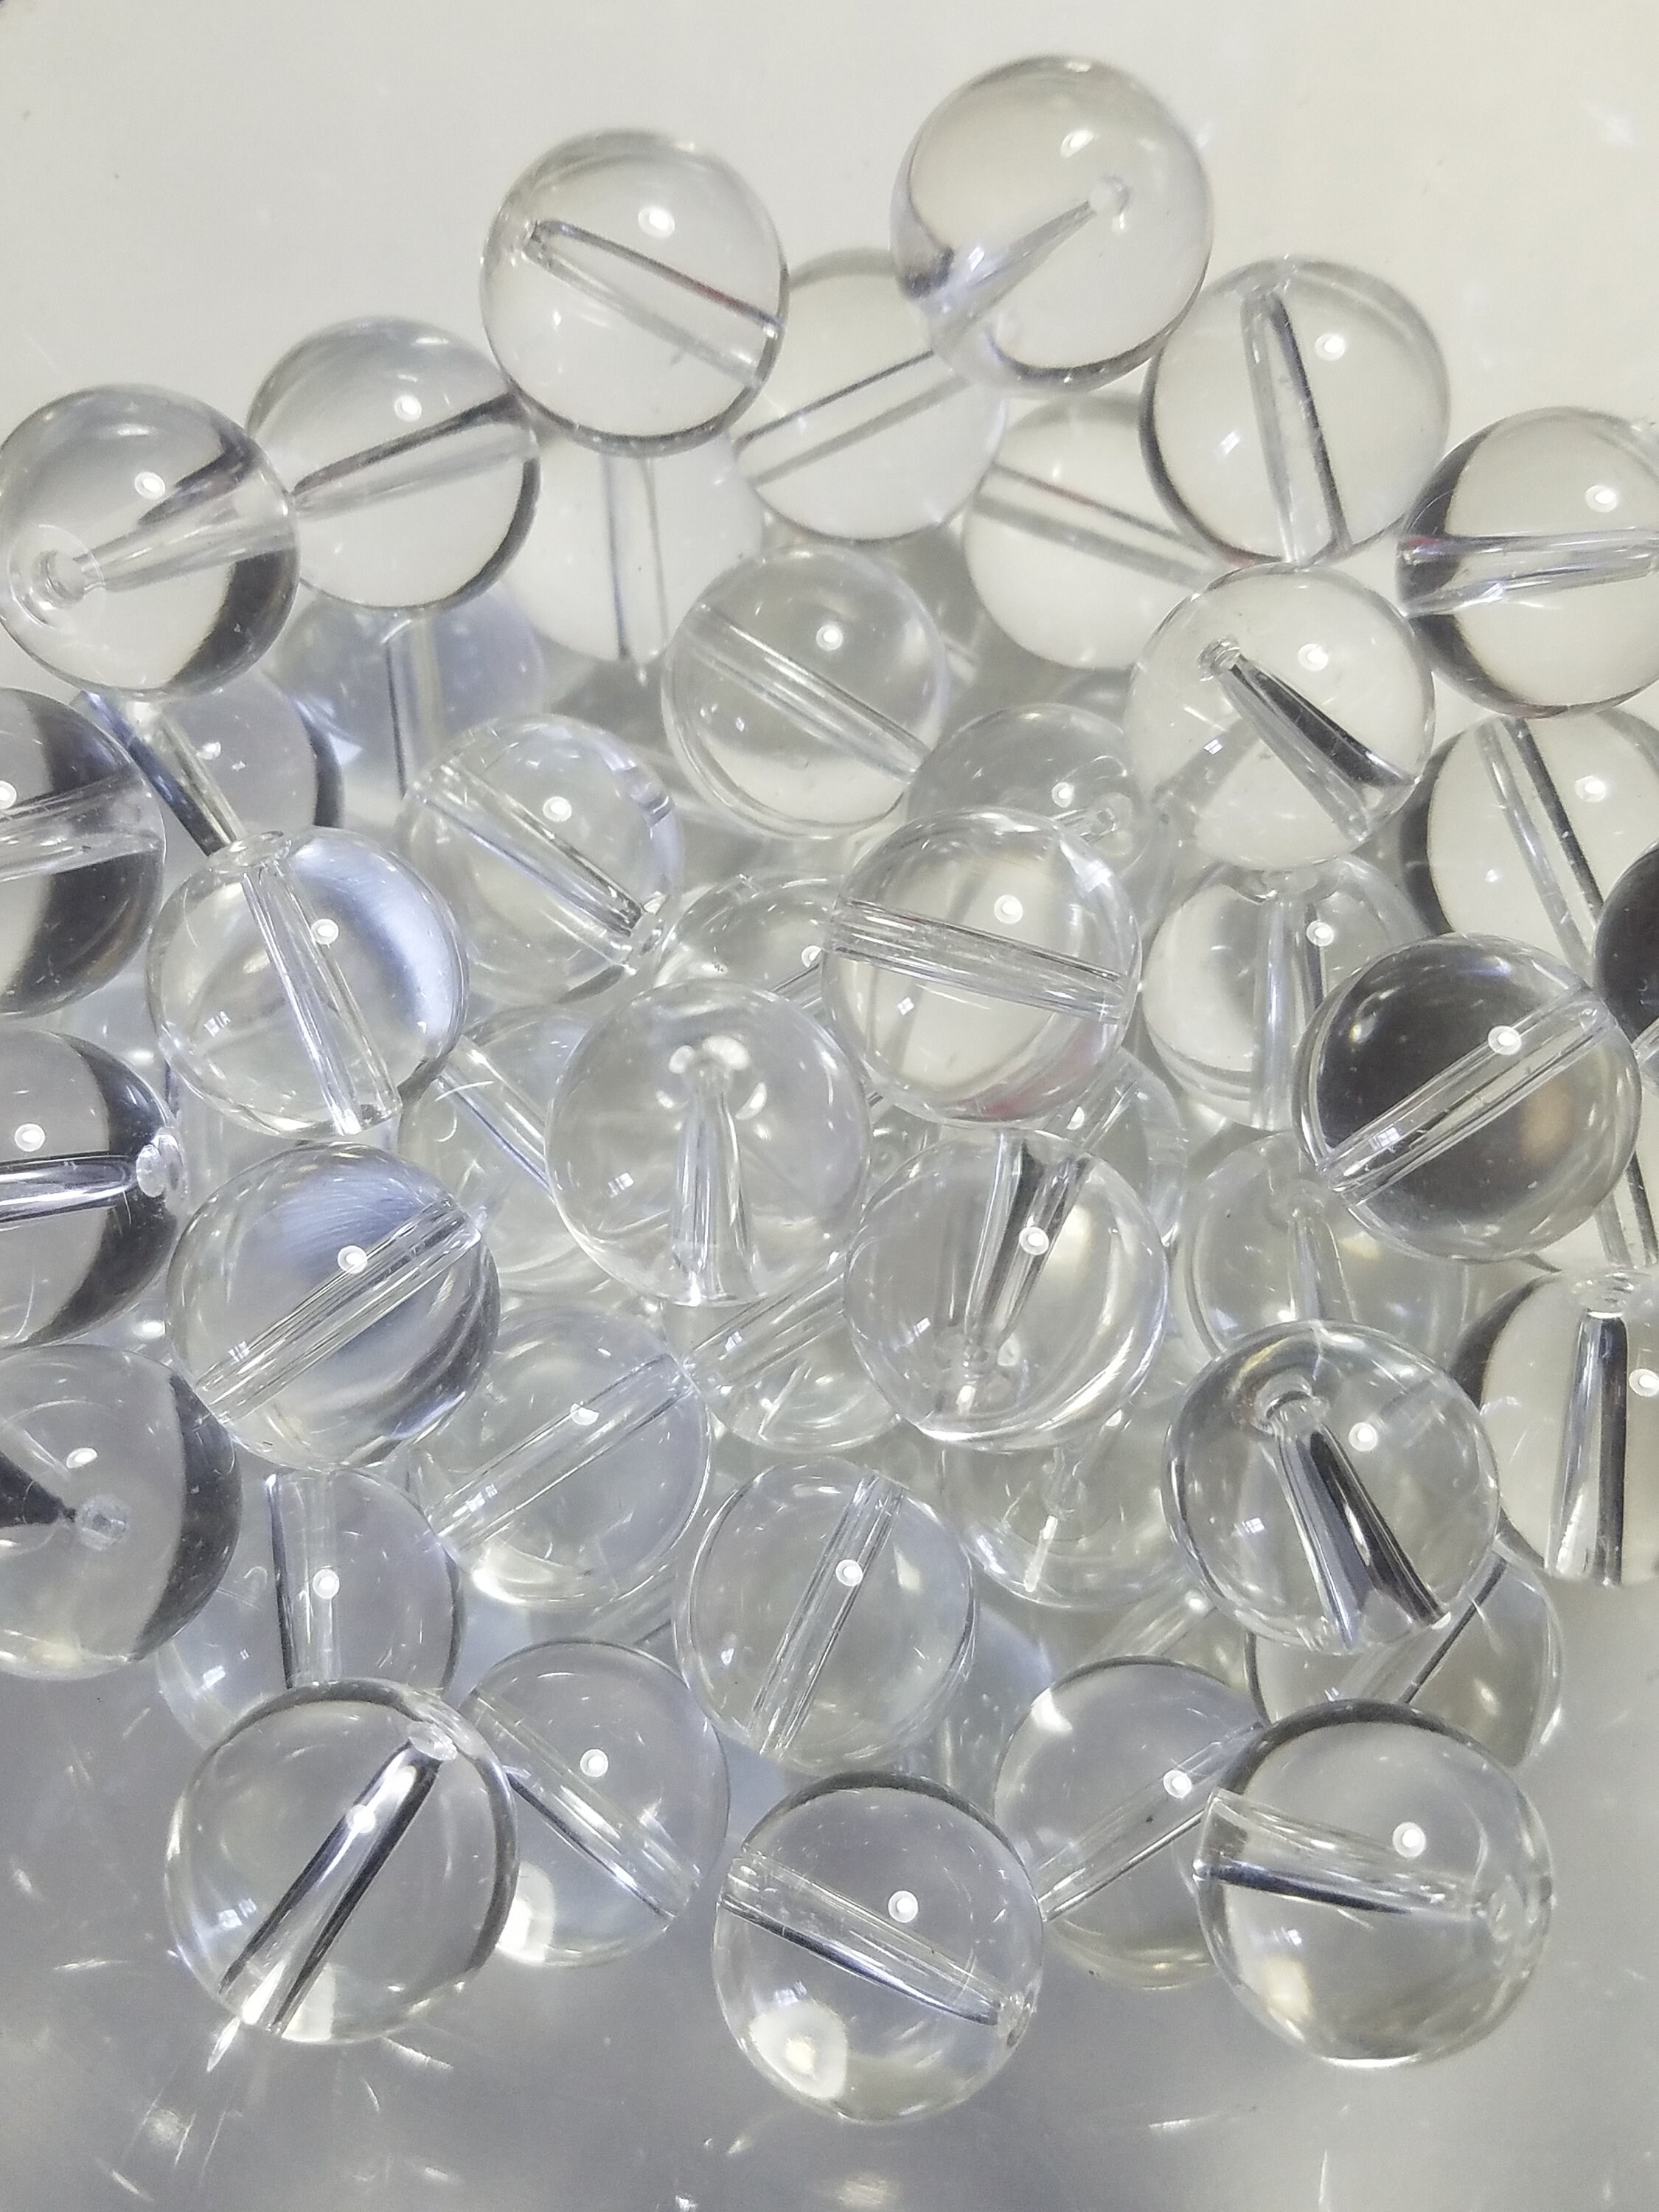 12 Beads - 8mm Cream White Shiny Pearl Glass Beads, Small Glass Beads,  Small Gumball Beads, Small White Pearl Beads, Round Glass Beads